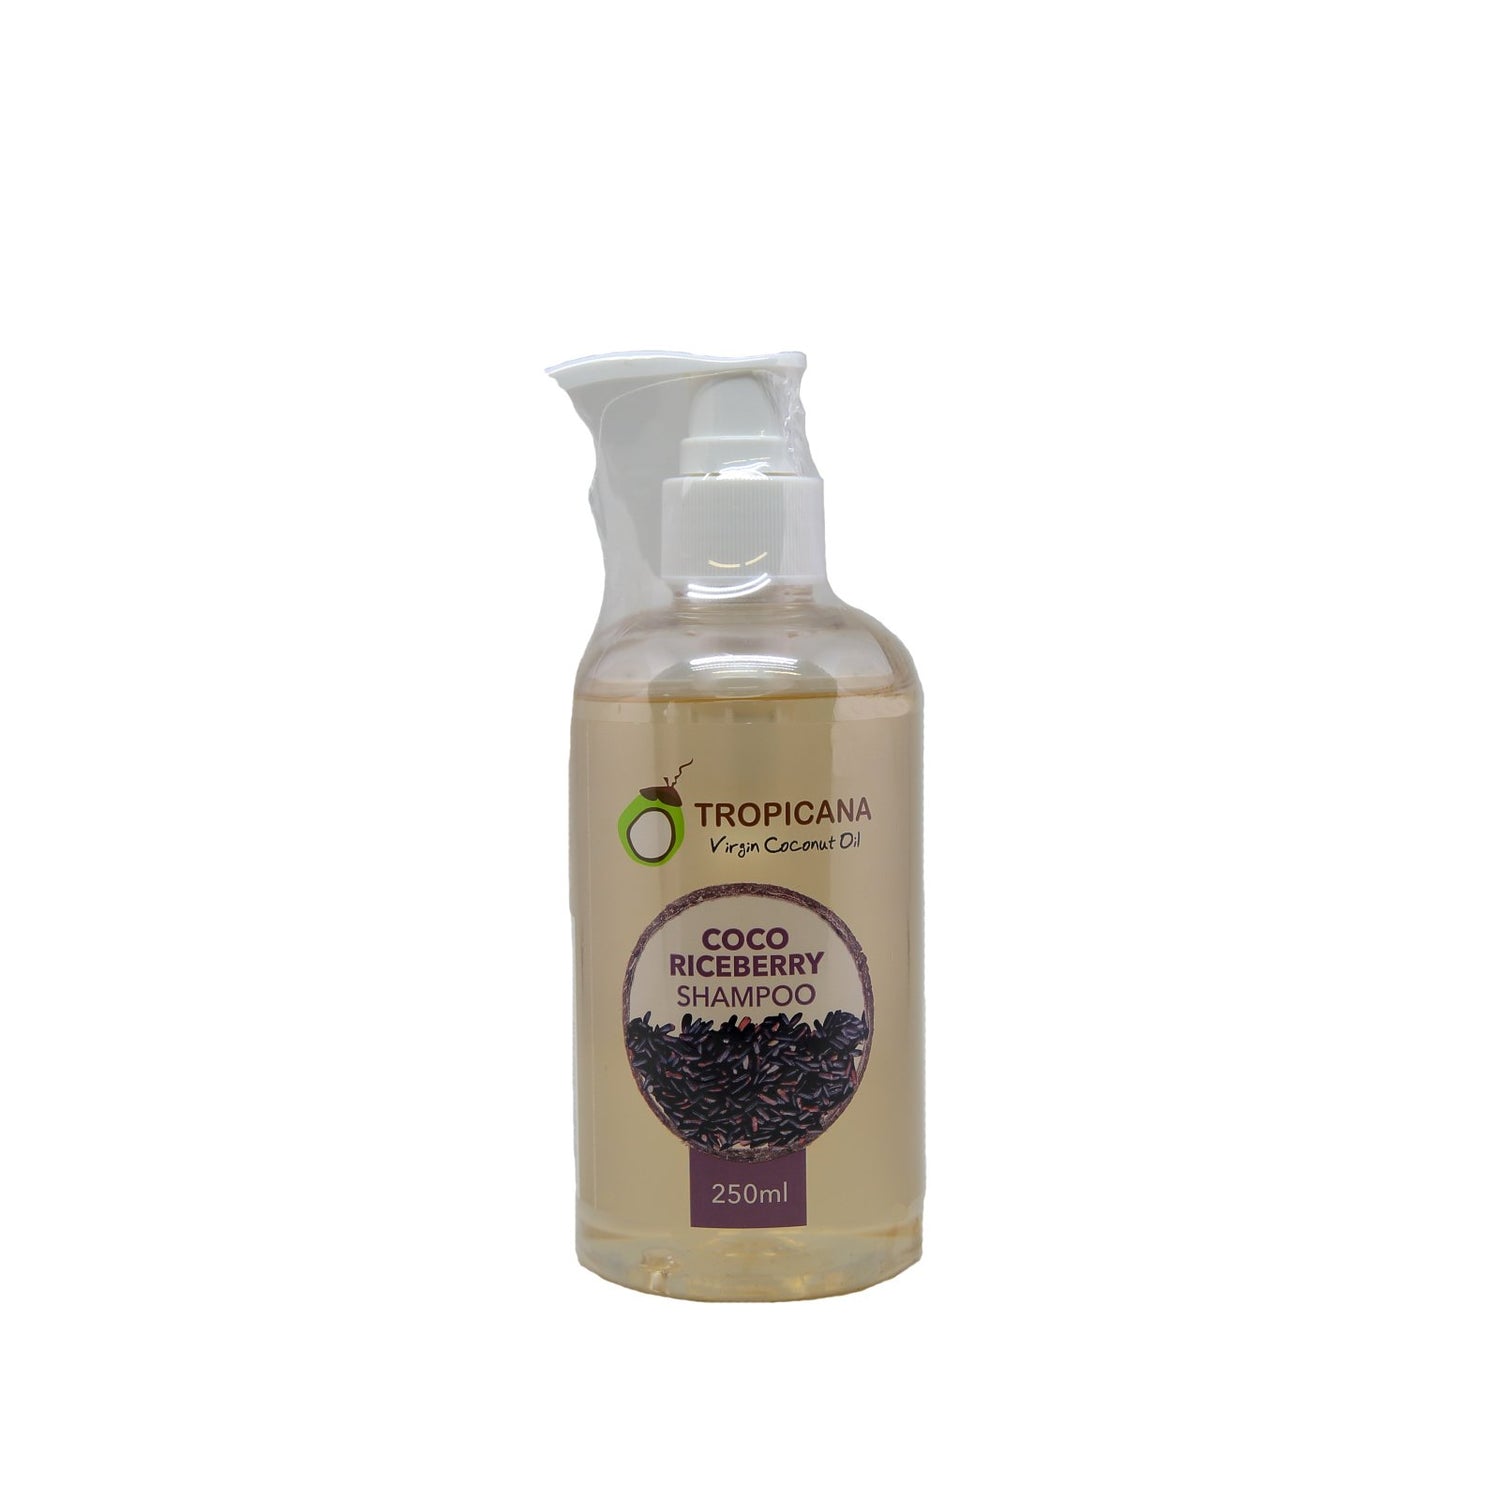 Tropicana Virgin Coconut Oil - Coco Riceberry Shampoo - 250ml [EXP 5 SEP 2020] - WERONE